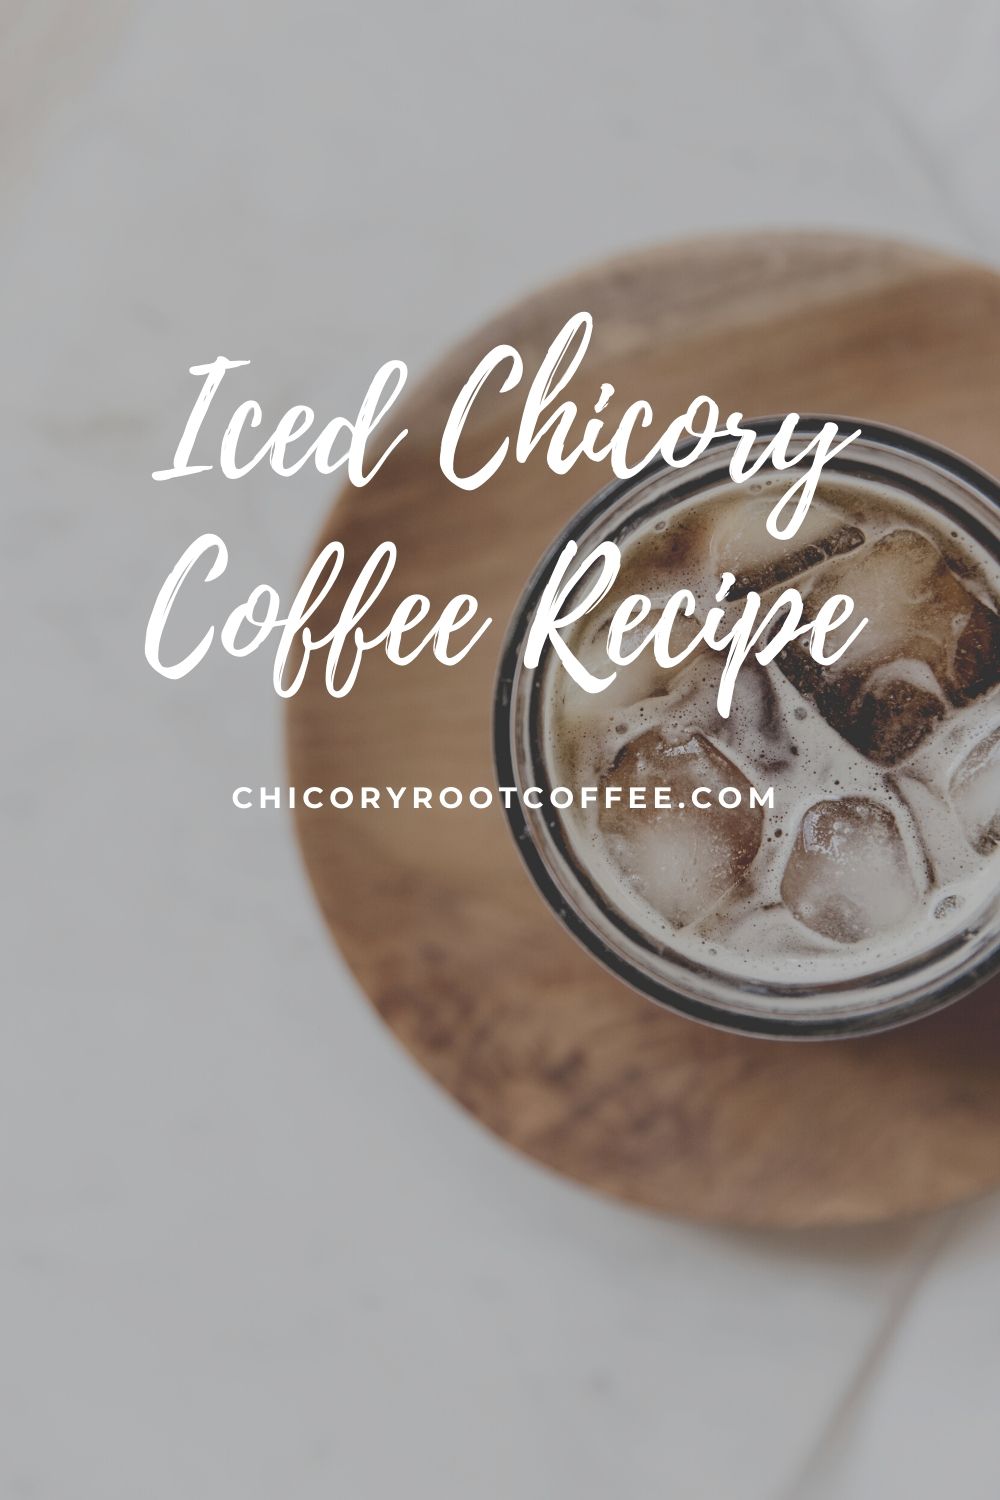 iced chicory coffee recipe